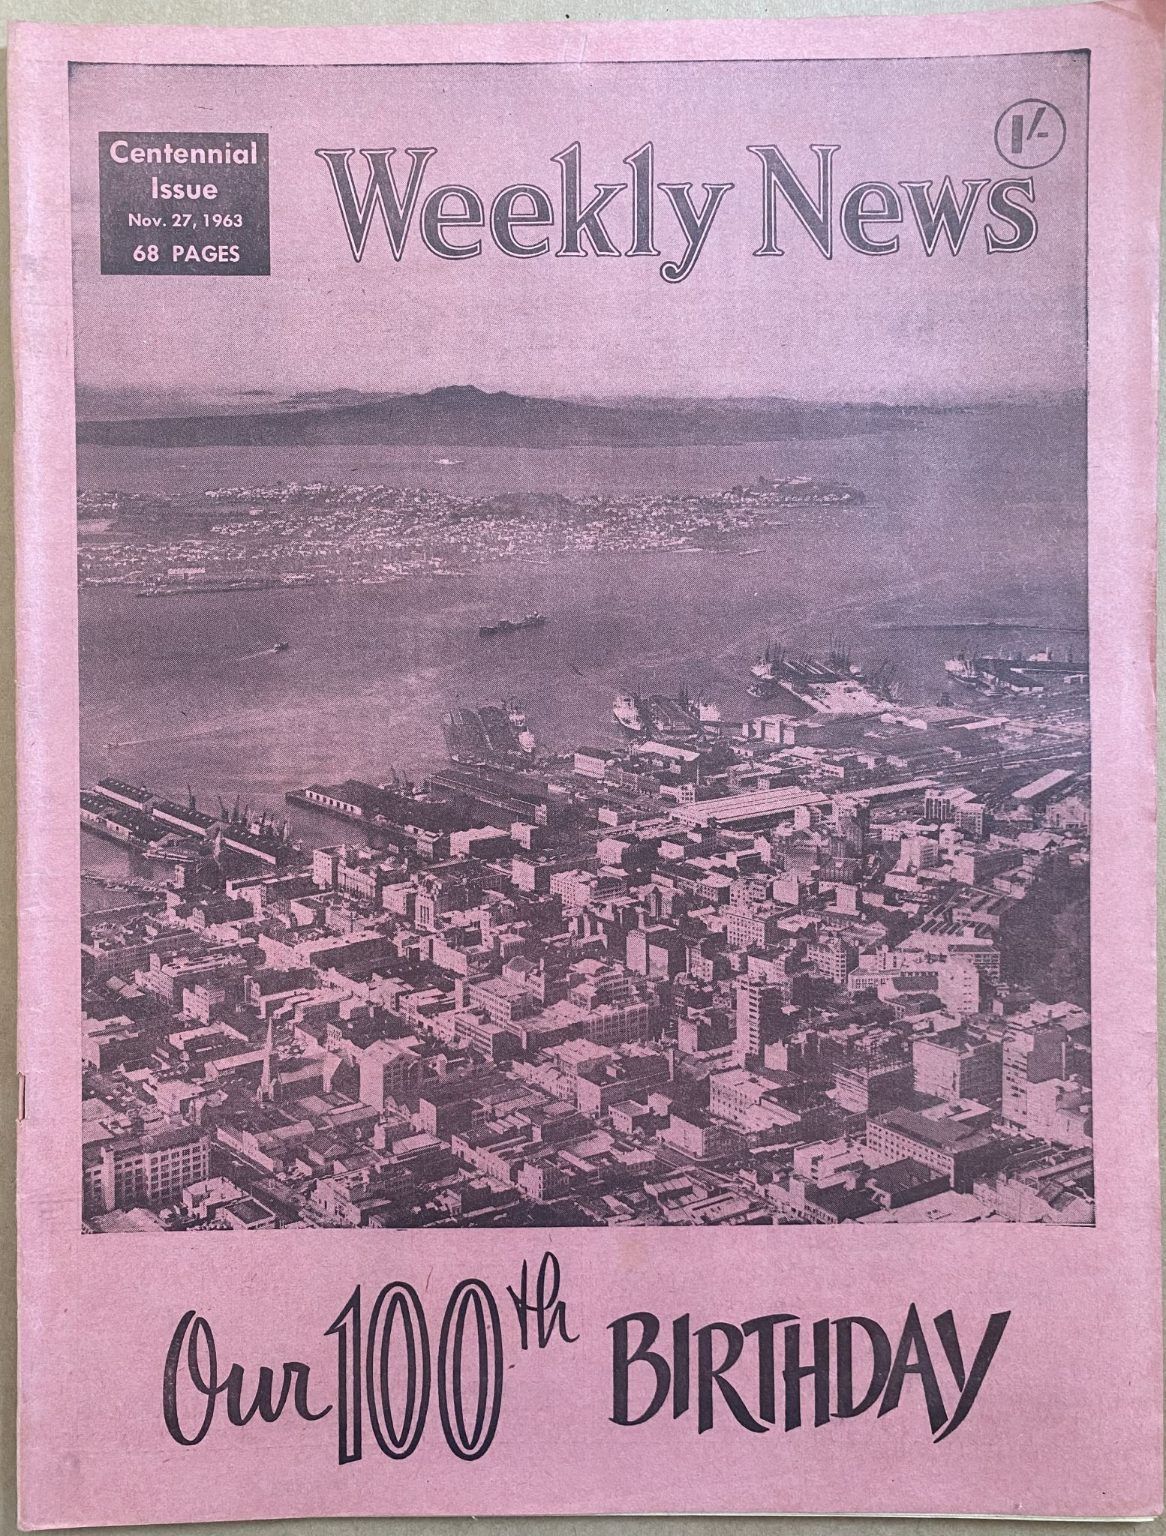 OLD NEWSPAPER: The Weekly News, No. 5218, 27 November 1963 - 100th Birthday